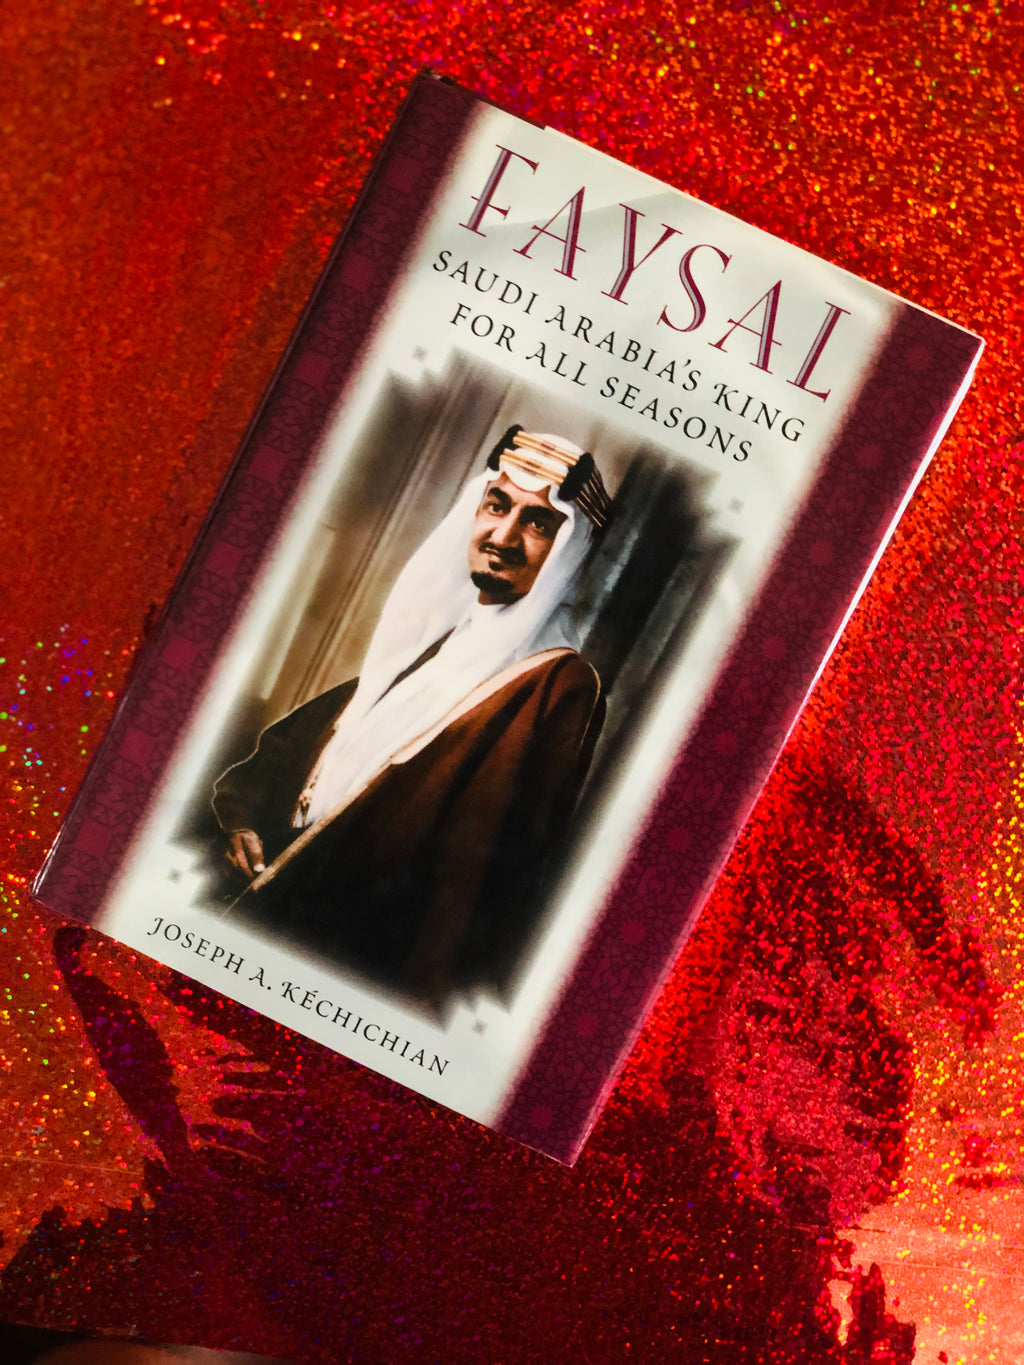 Faysal, Saudi Arabia's King For All Seasons- By Joseph A. Kechichan